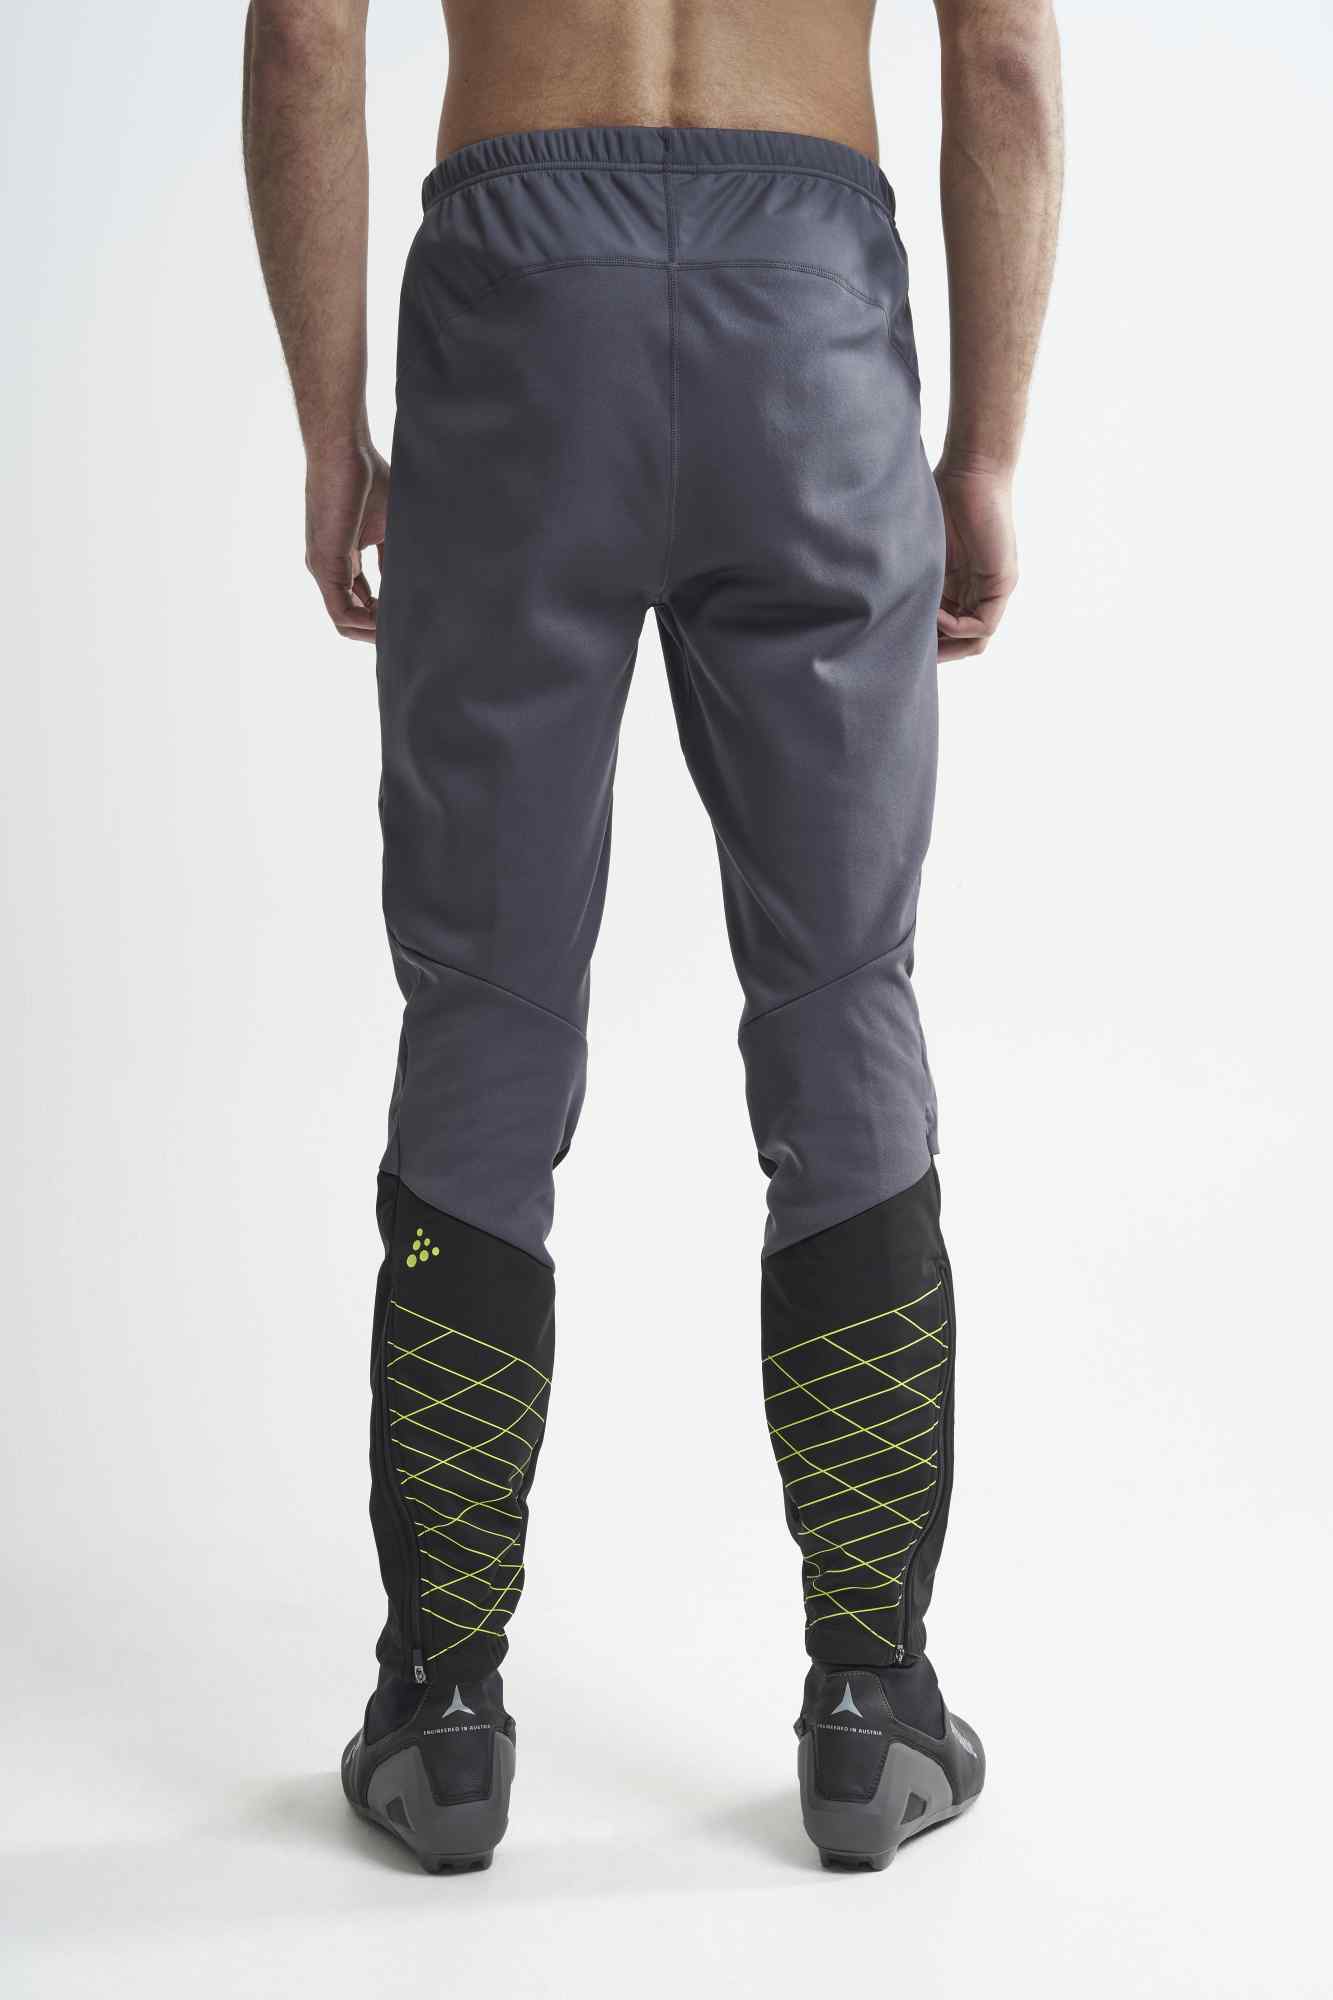 Men’s functional nordic ski pants